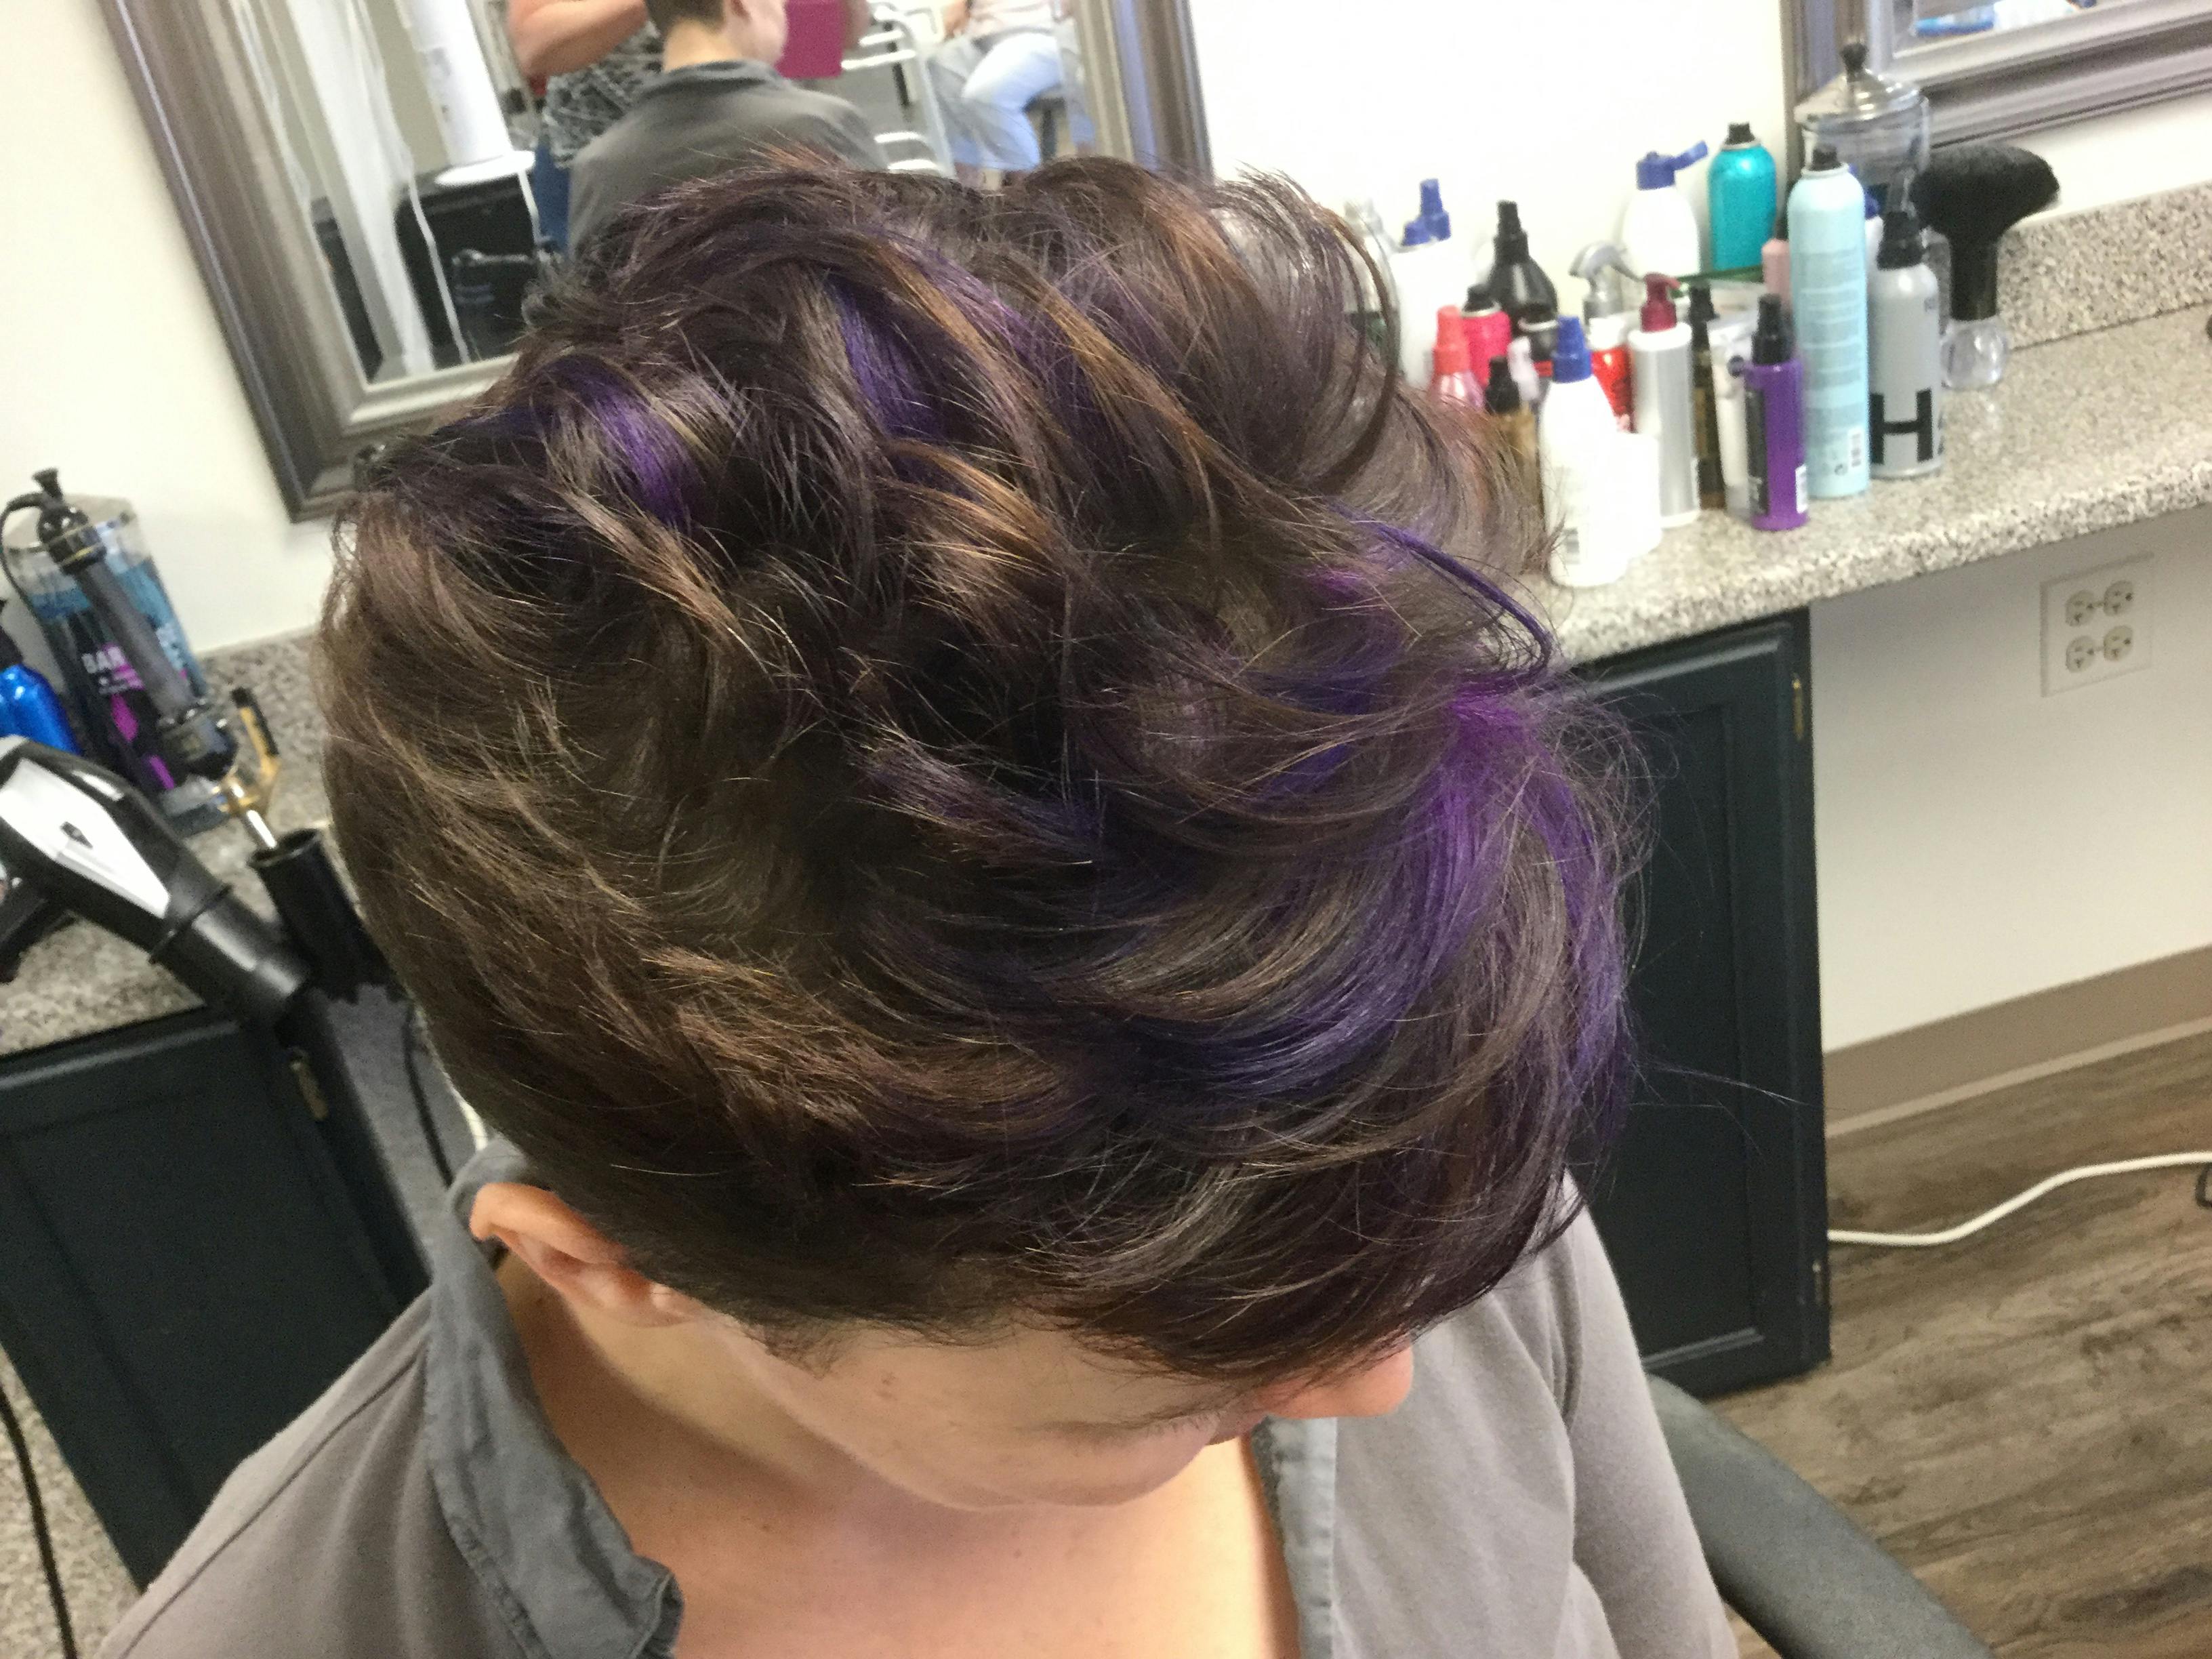 Free stock photo of Purple highlights on hair